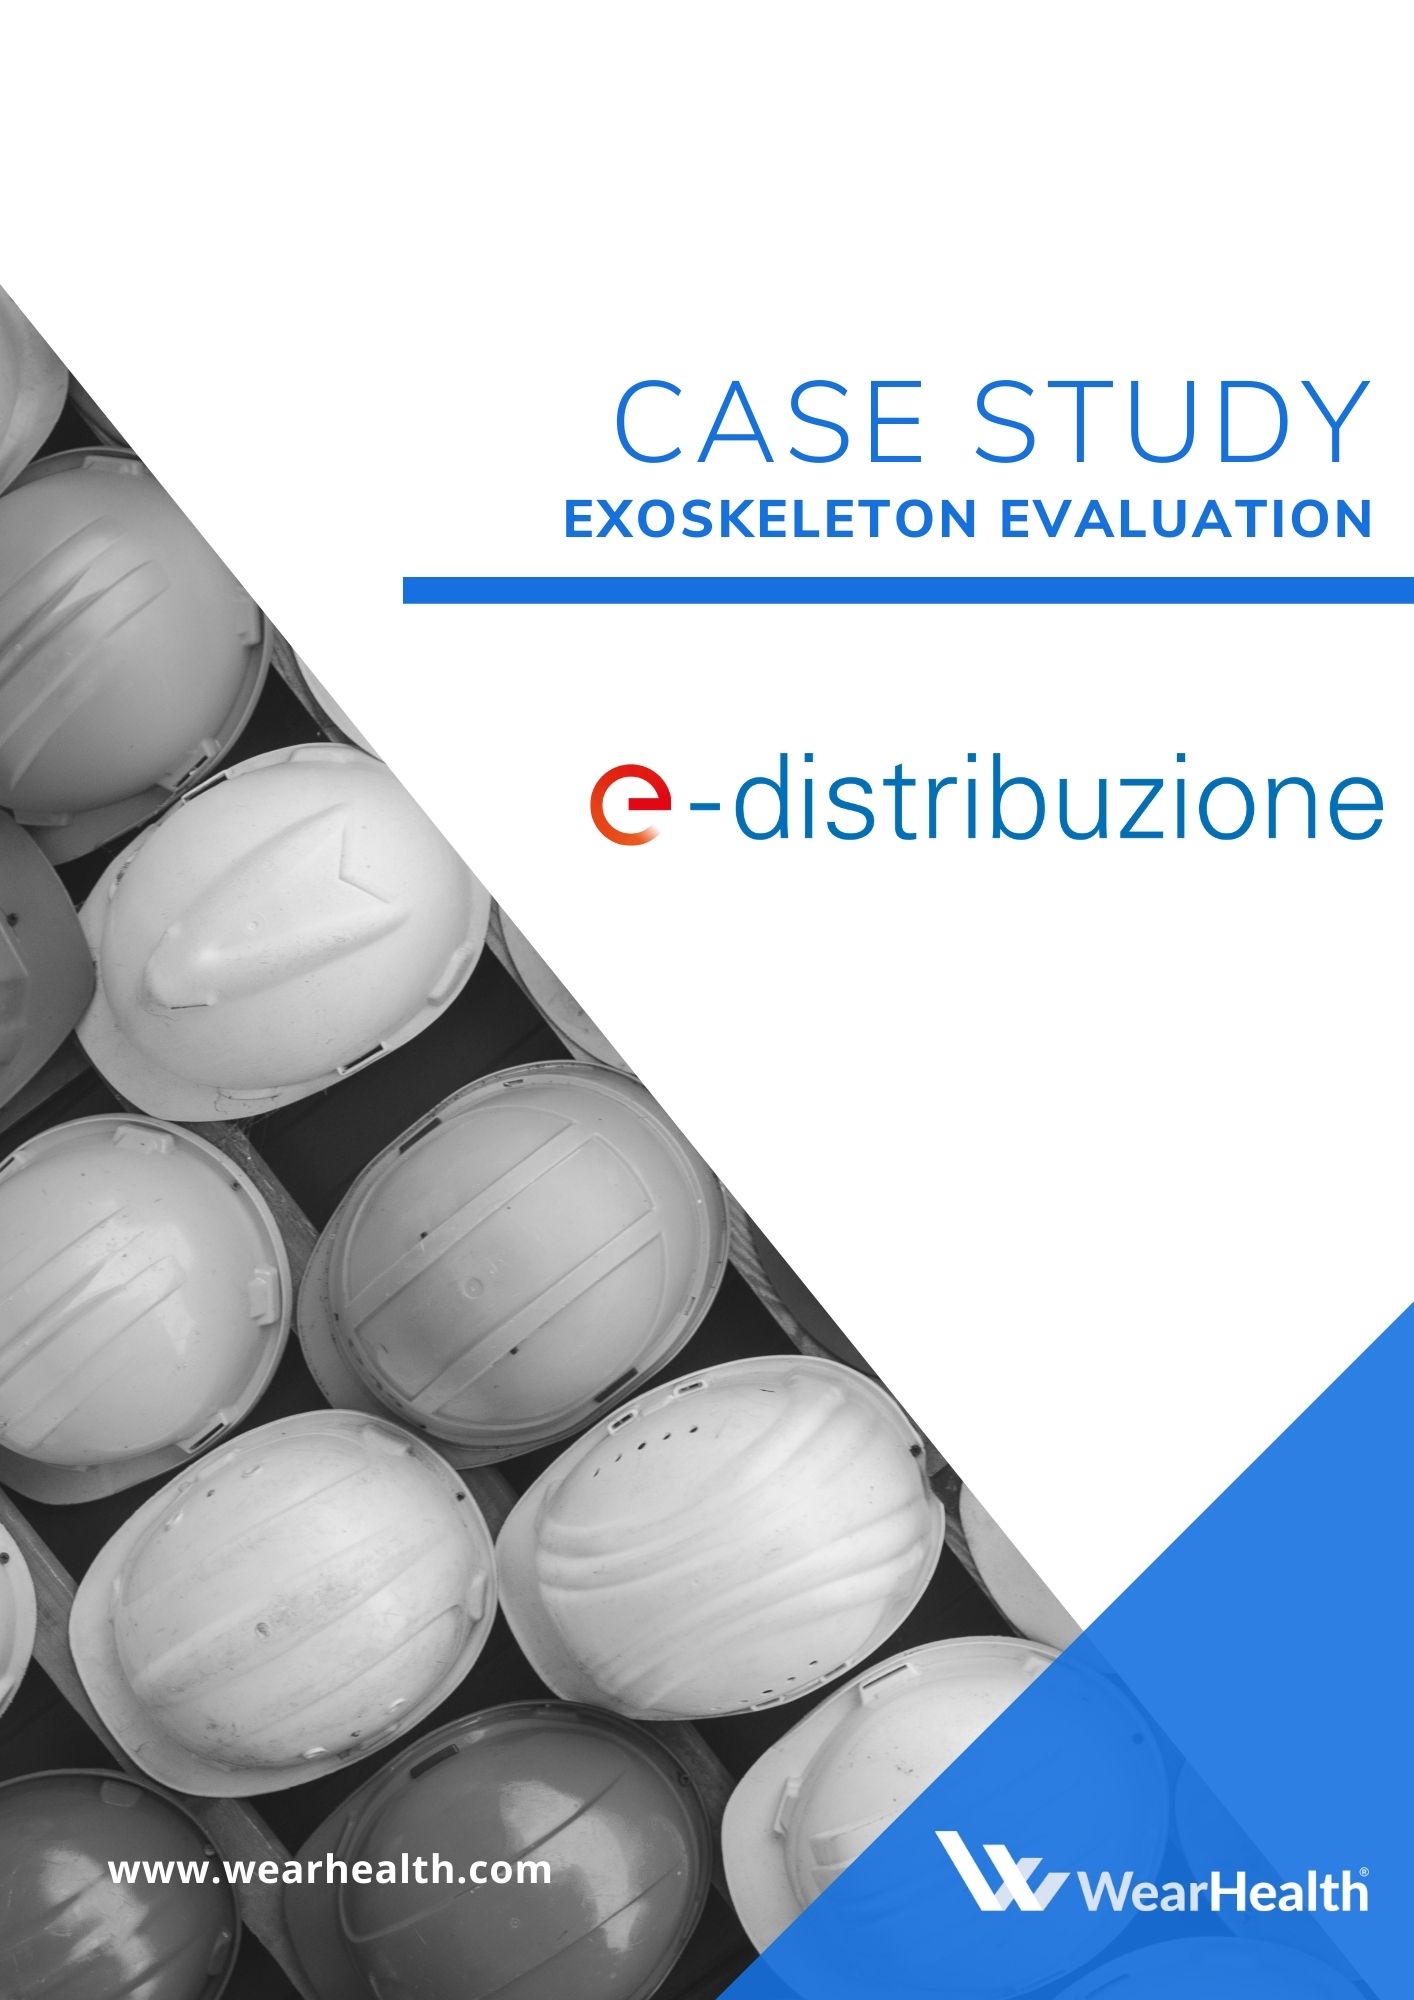 Exoskeleton evaluation case study for e-distribuzione